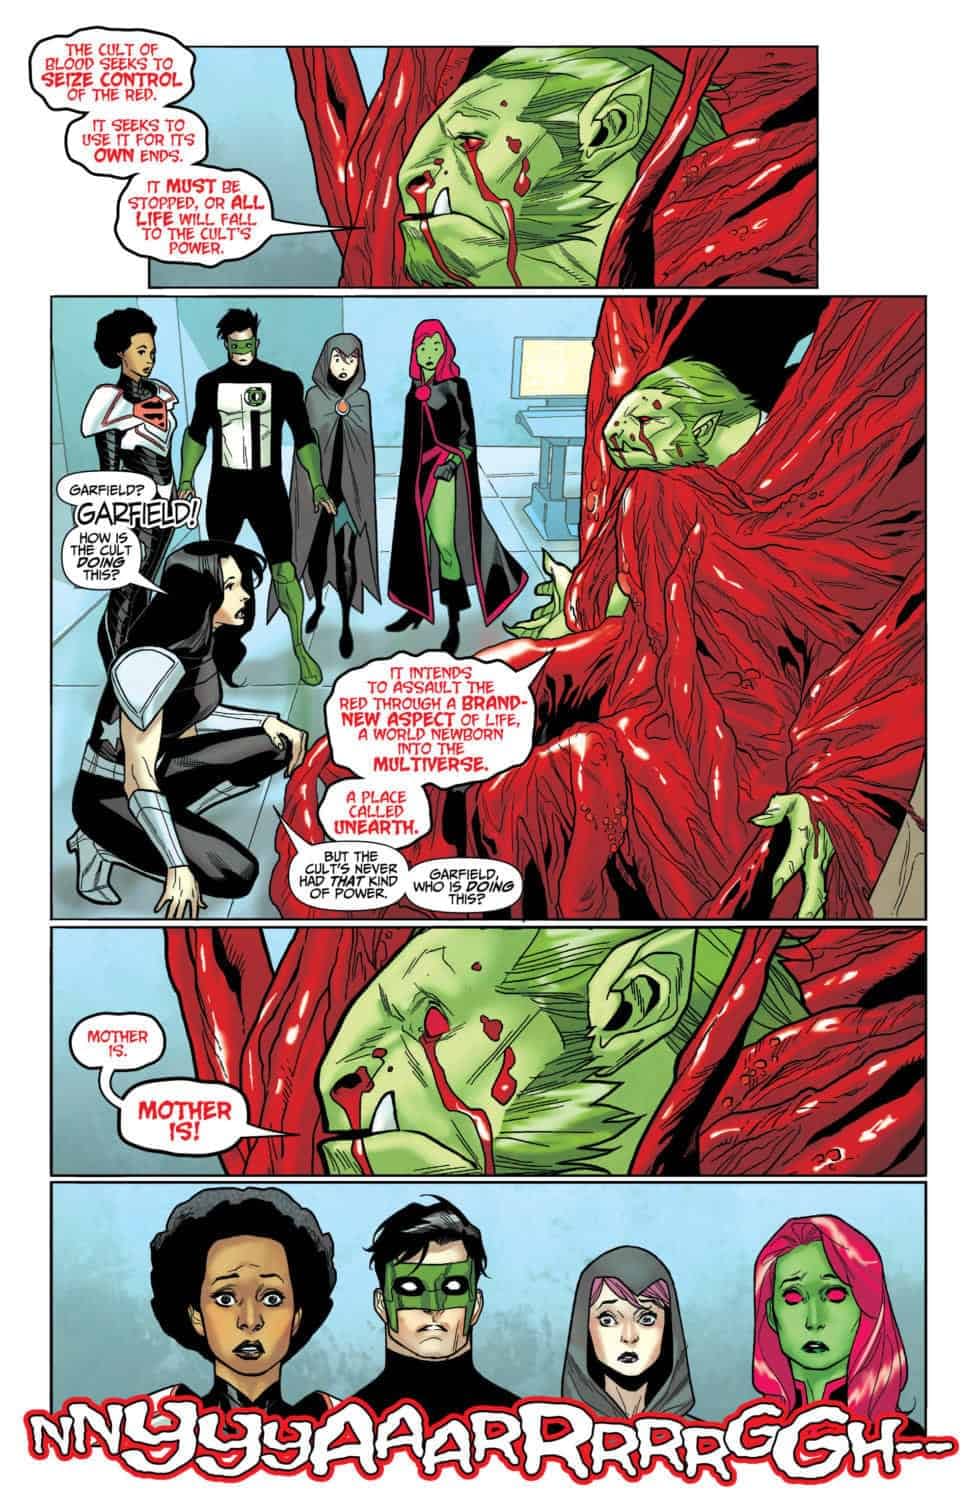 Asylum-Seeking Mother Blood Takes on ICE in Next Week's Titans #32